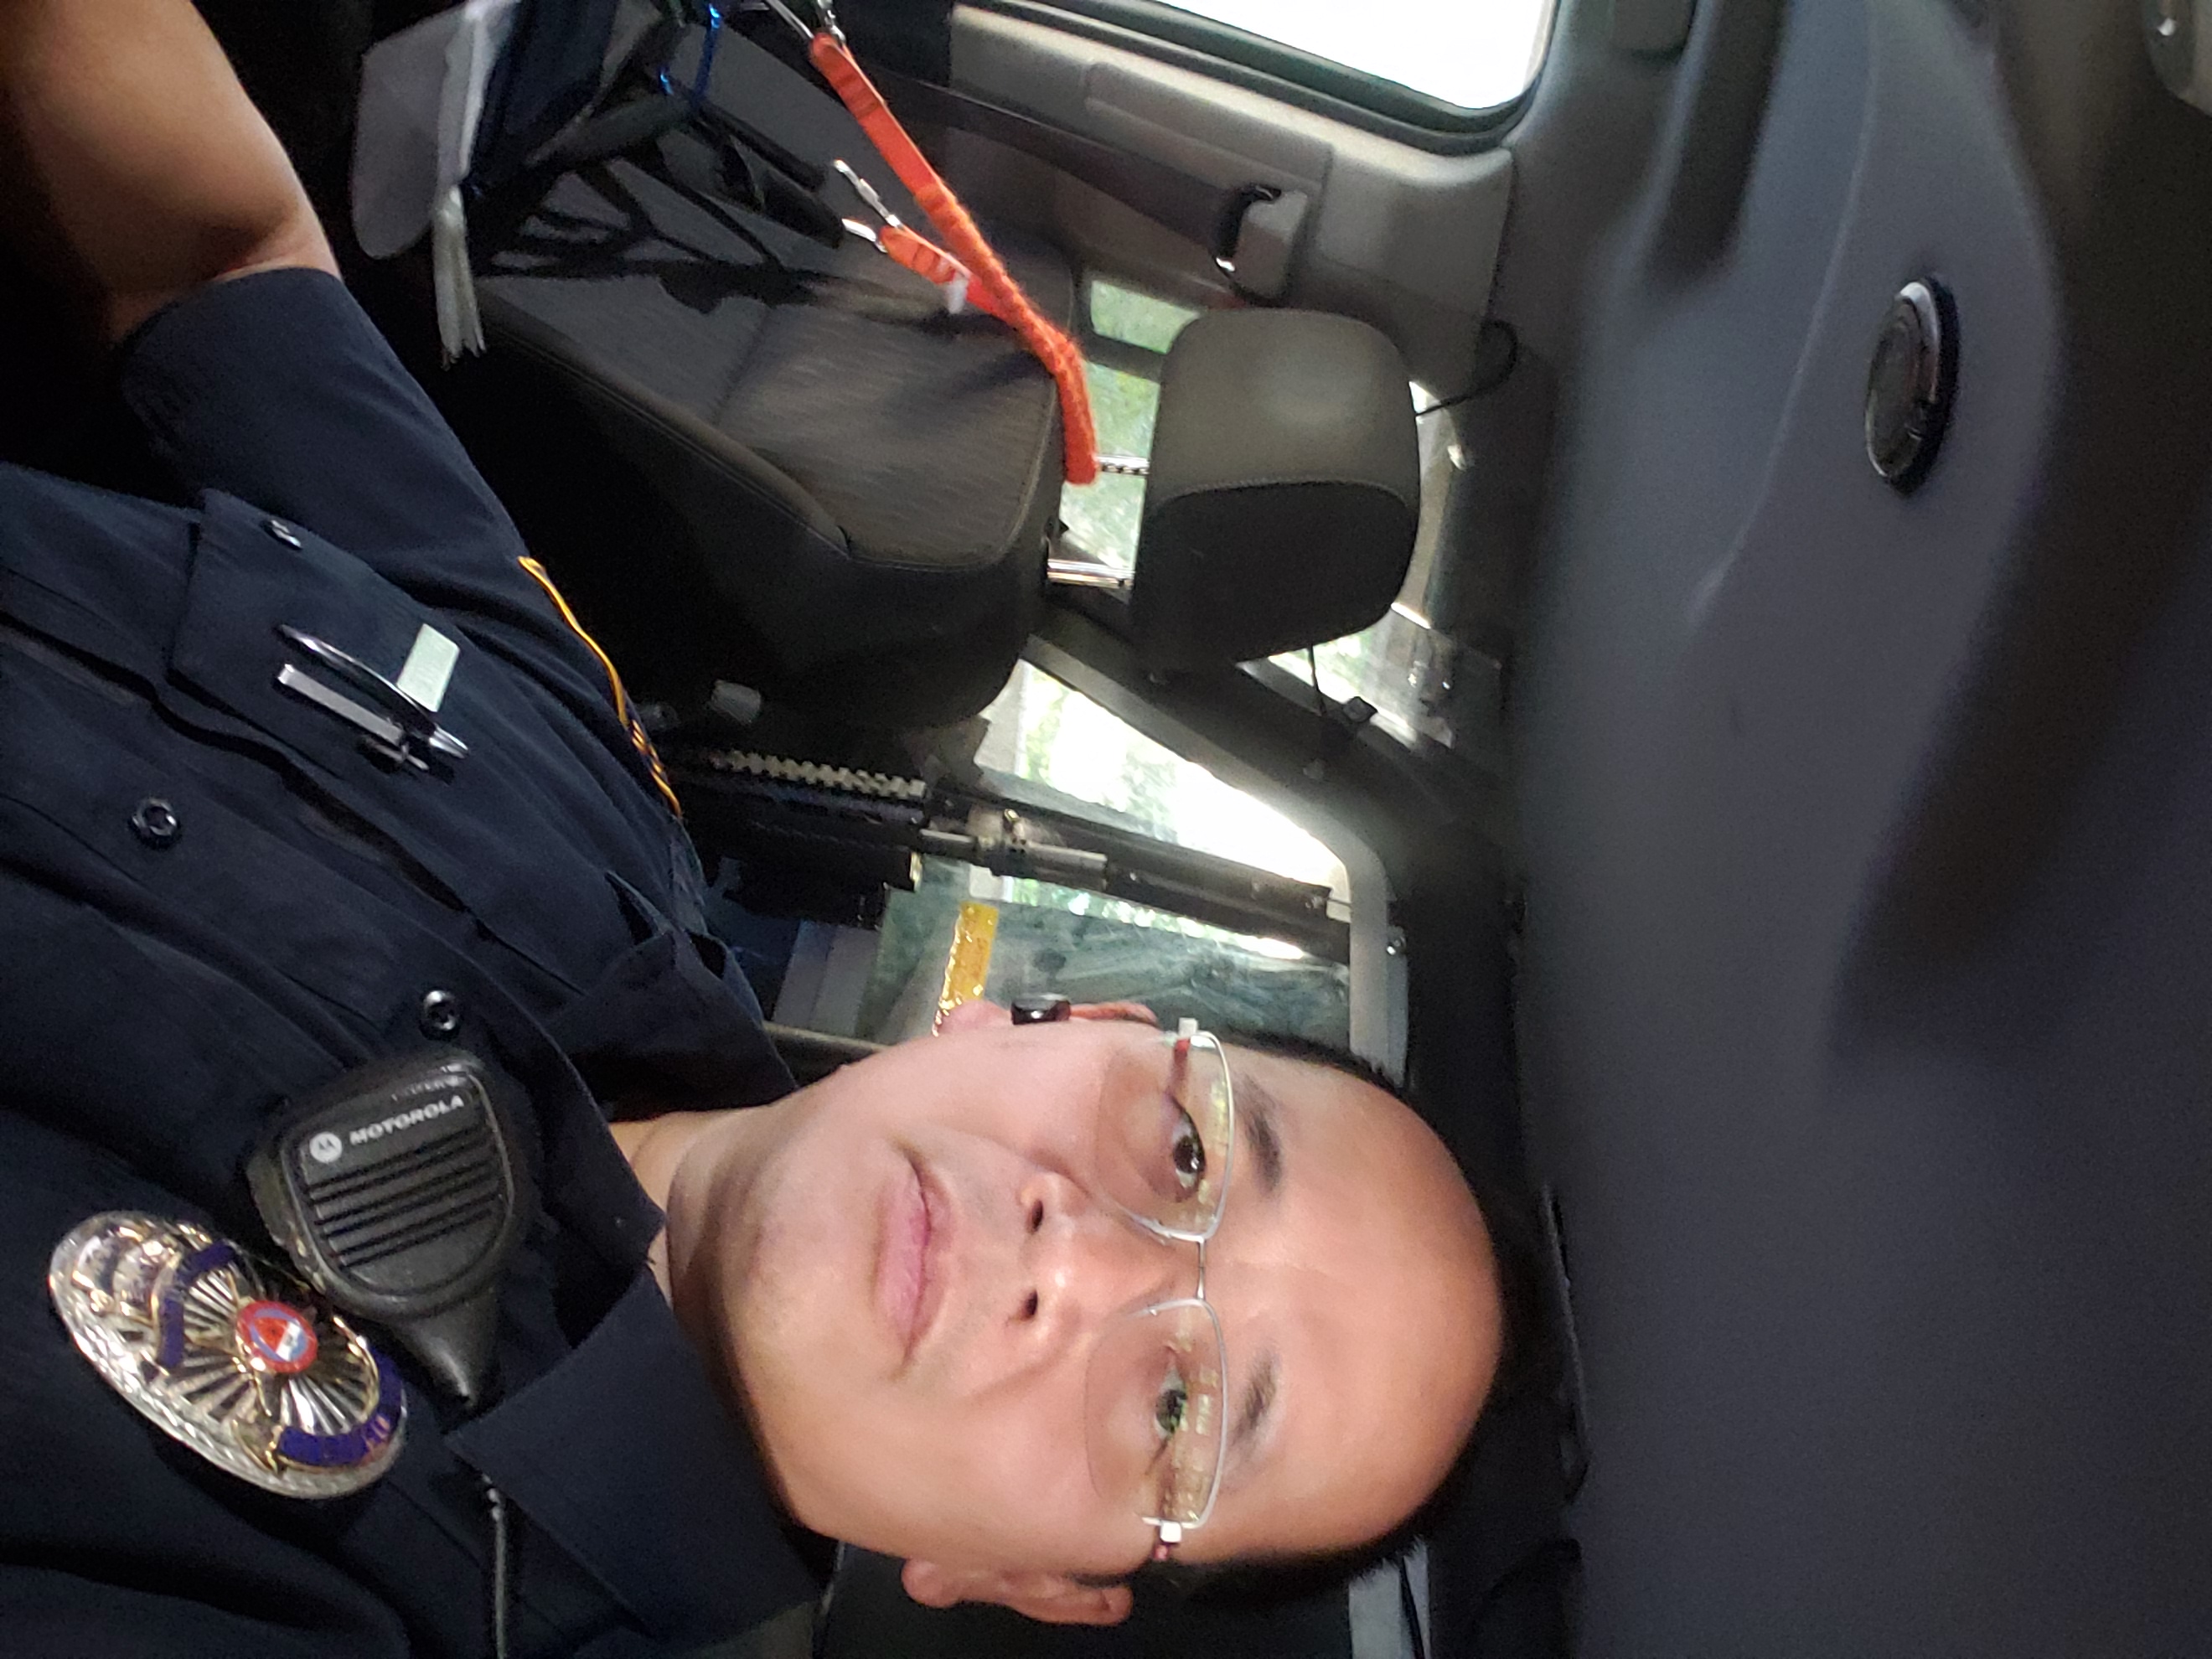 Officer Duong